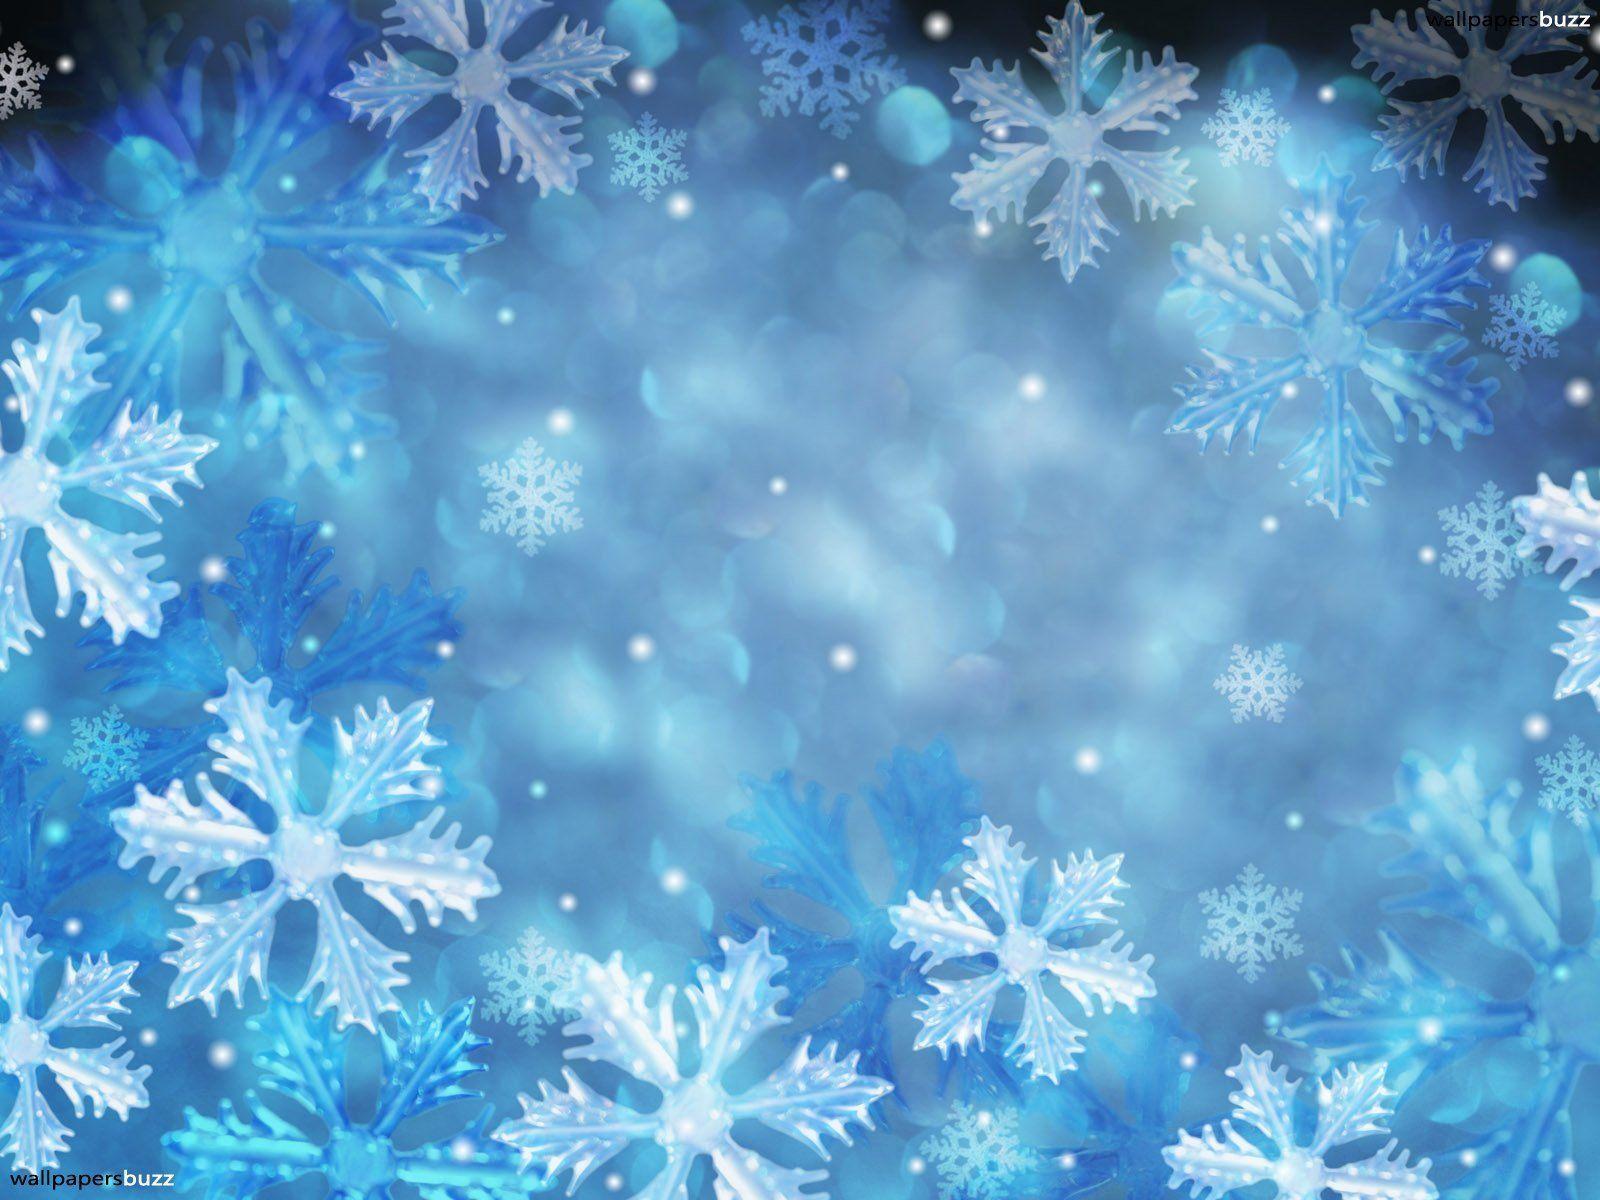 Wallpaper For > Winter Snowflake Wallpaper